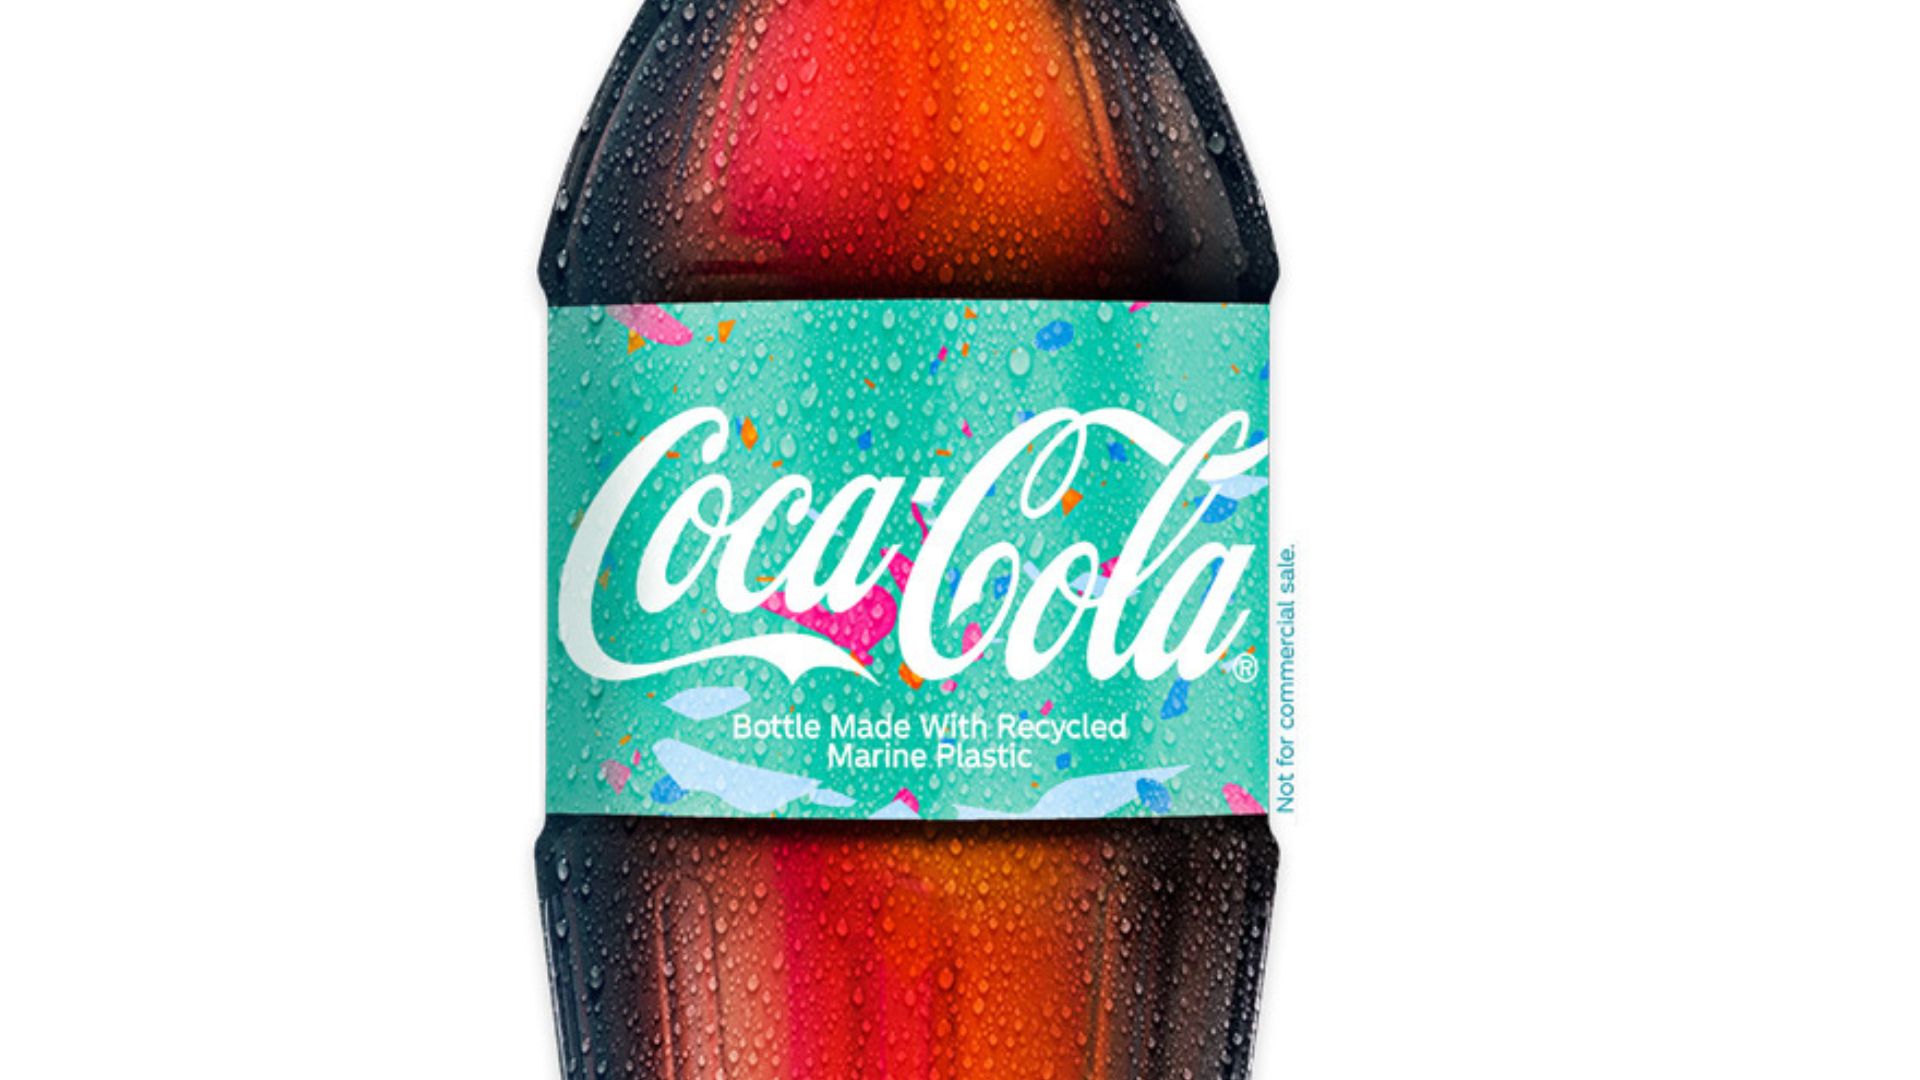 Coca-Cola Flasche aus recyceltem PET mit Meeresplastik